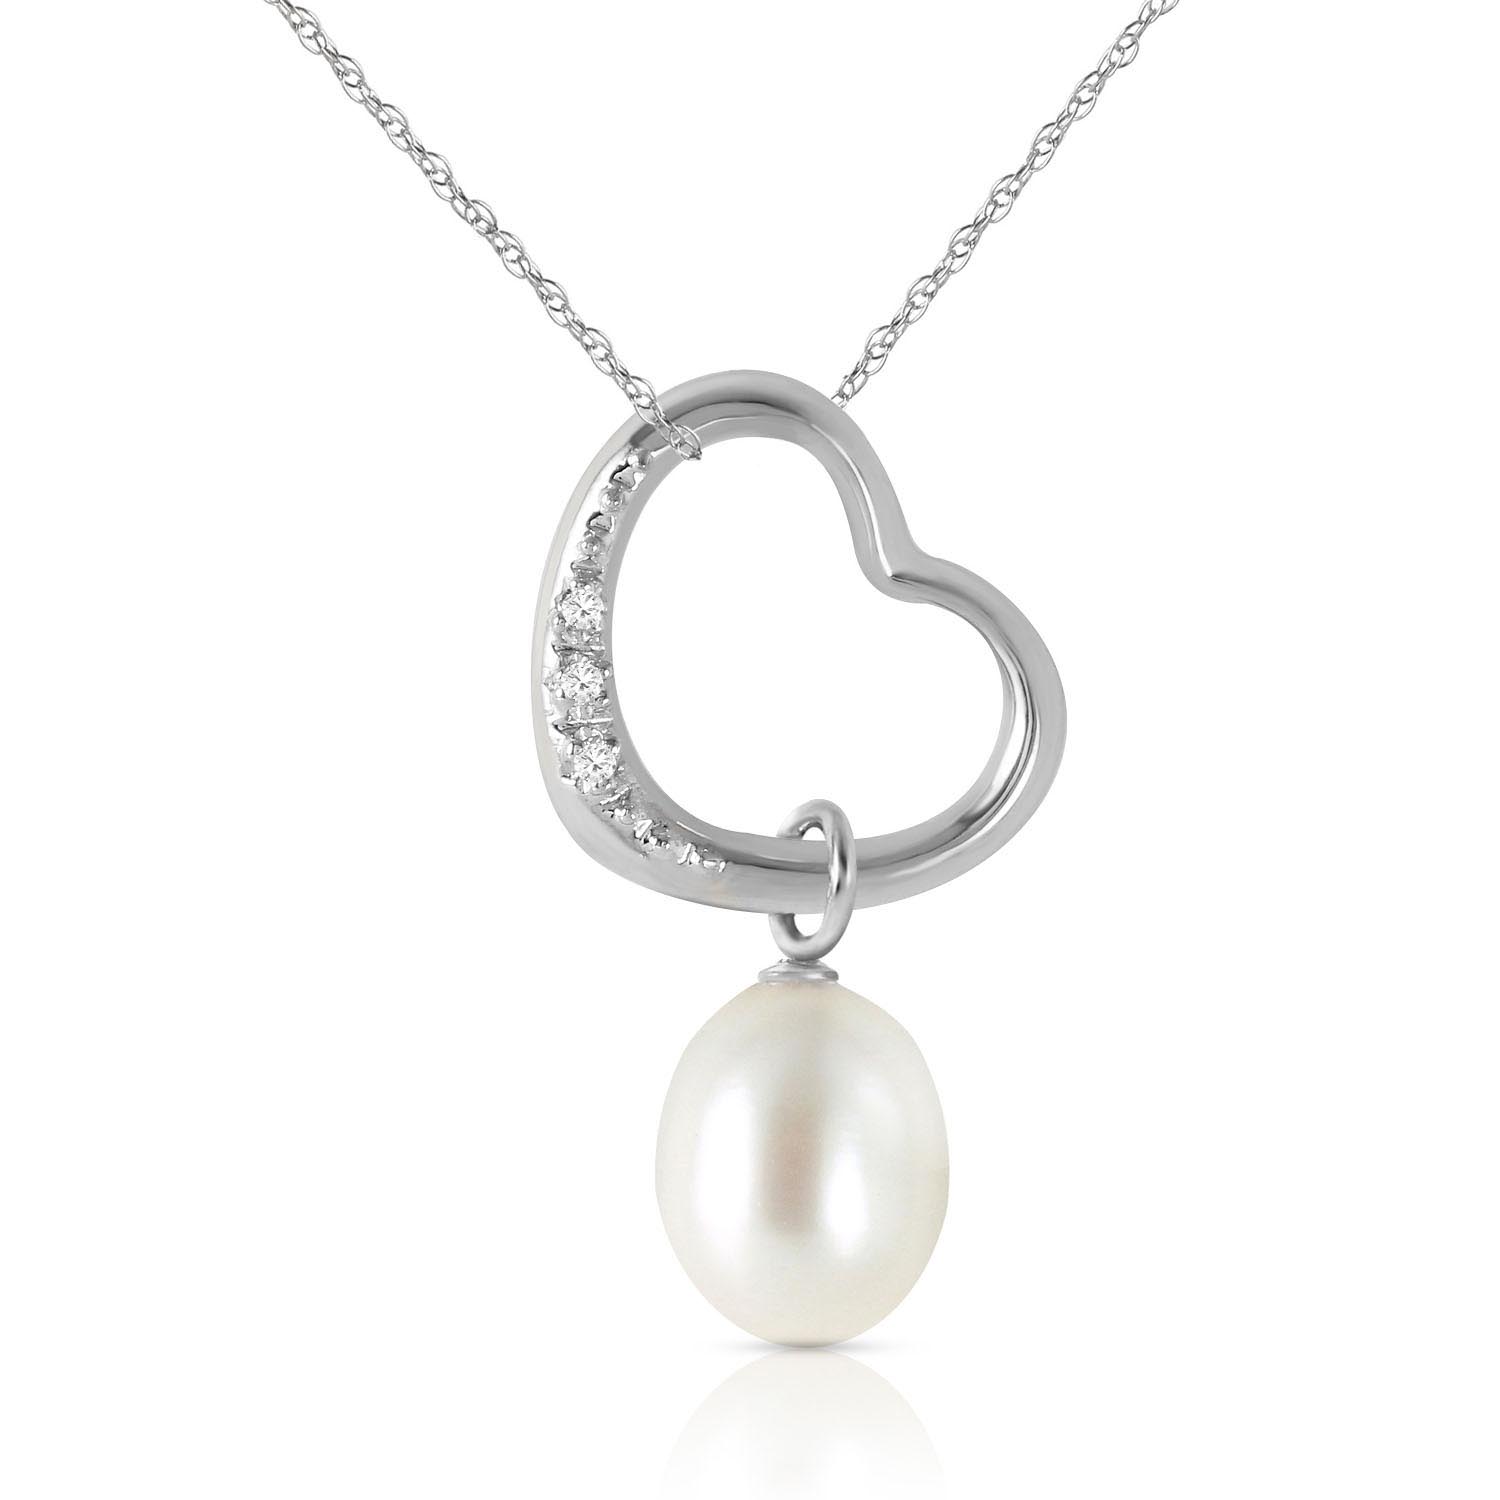 Pearl & Diamond Heart Pendant Necklace in 9ct White Gold